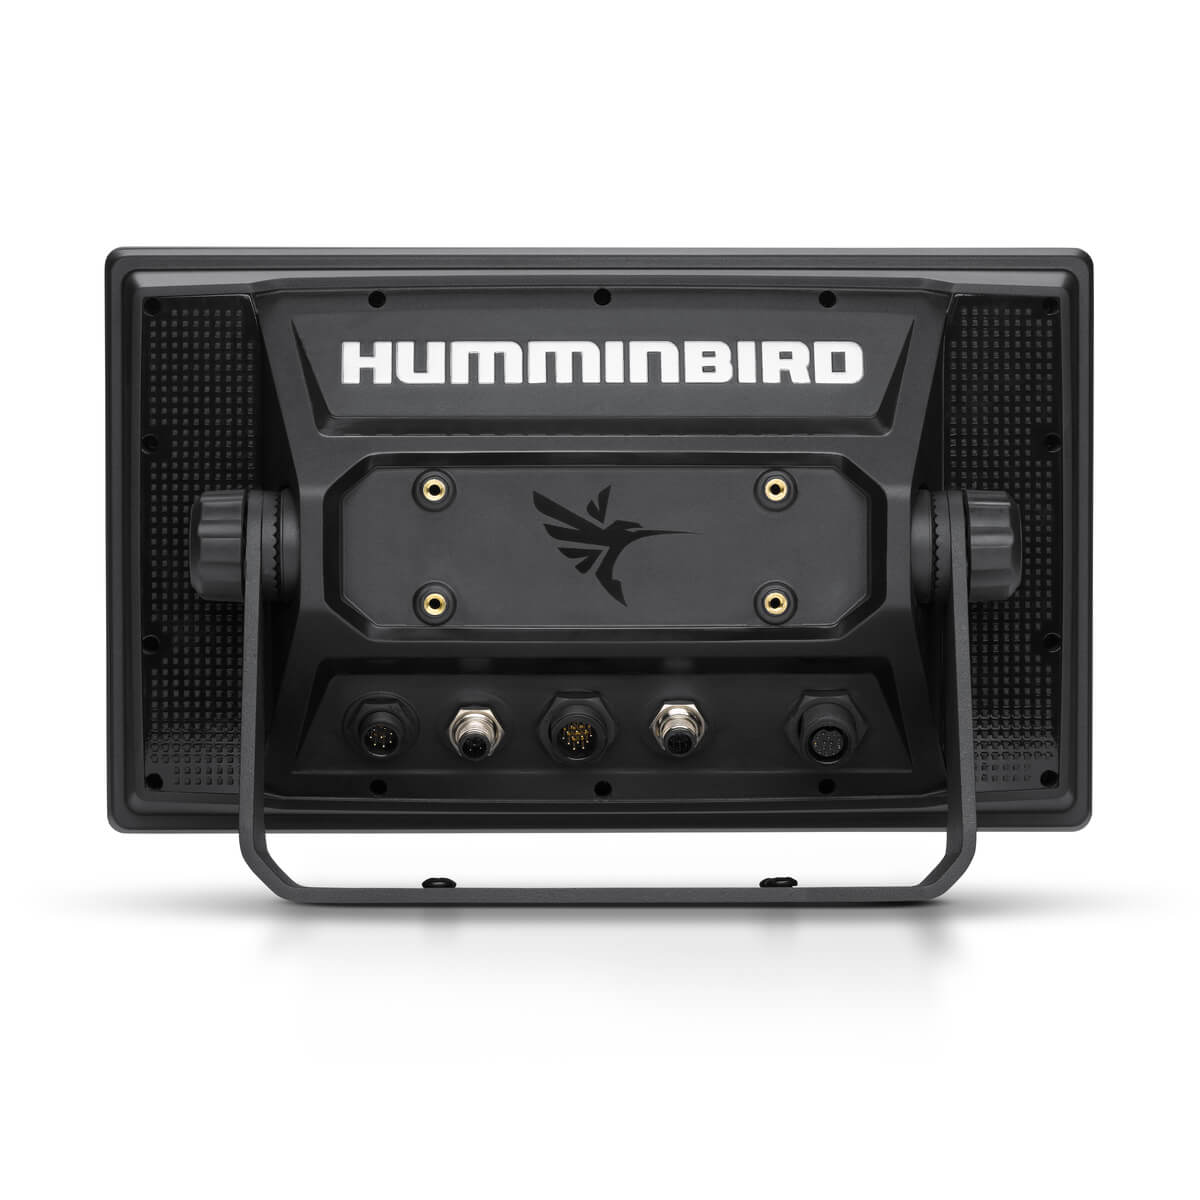 Humminbird - SOLIX 10 CHIRP MEGA SI Fishfinder/GPS Combo G2 with Transom Mount Transducer - 411010-1